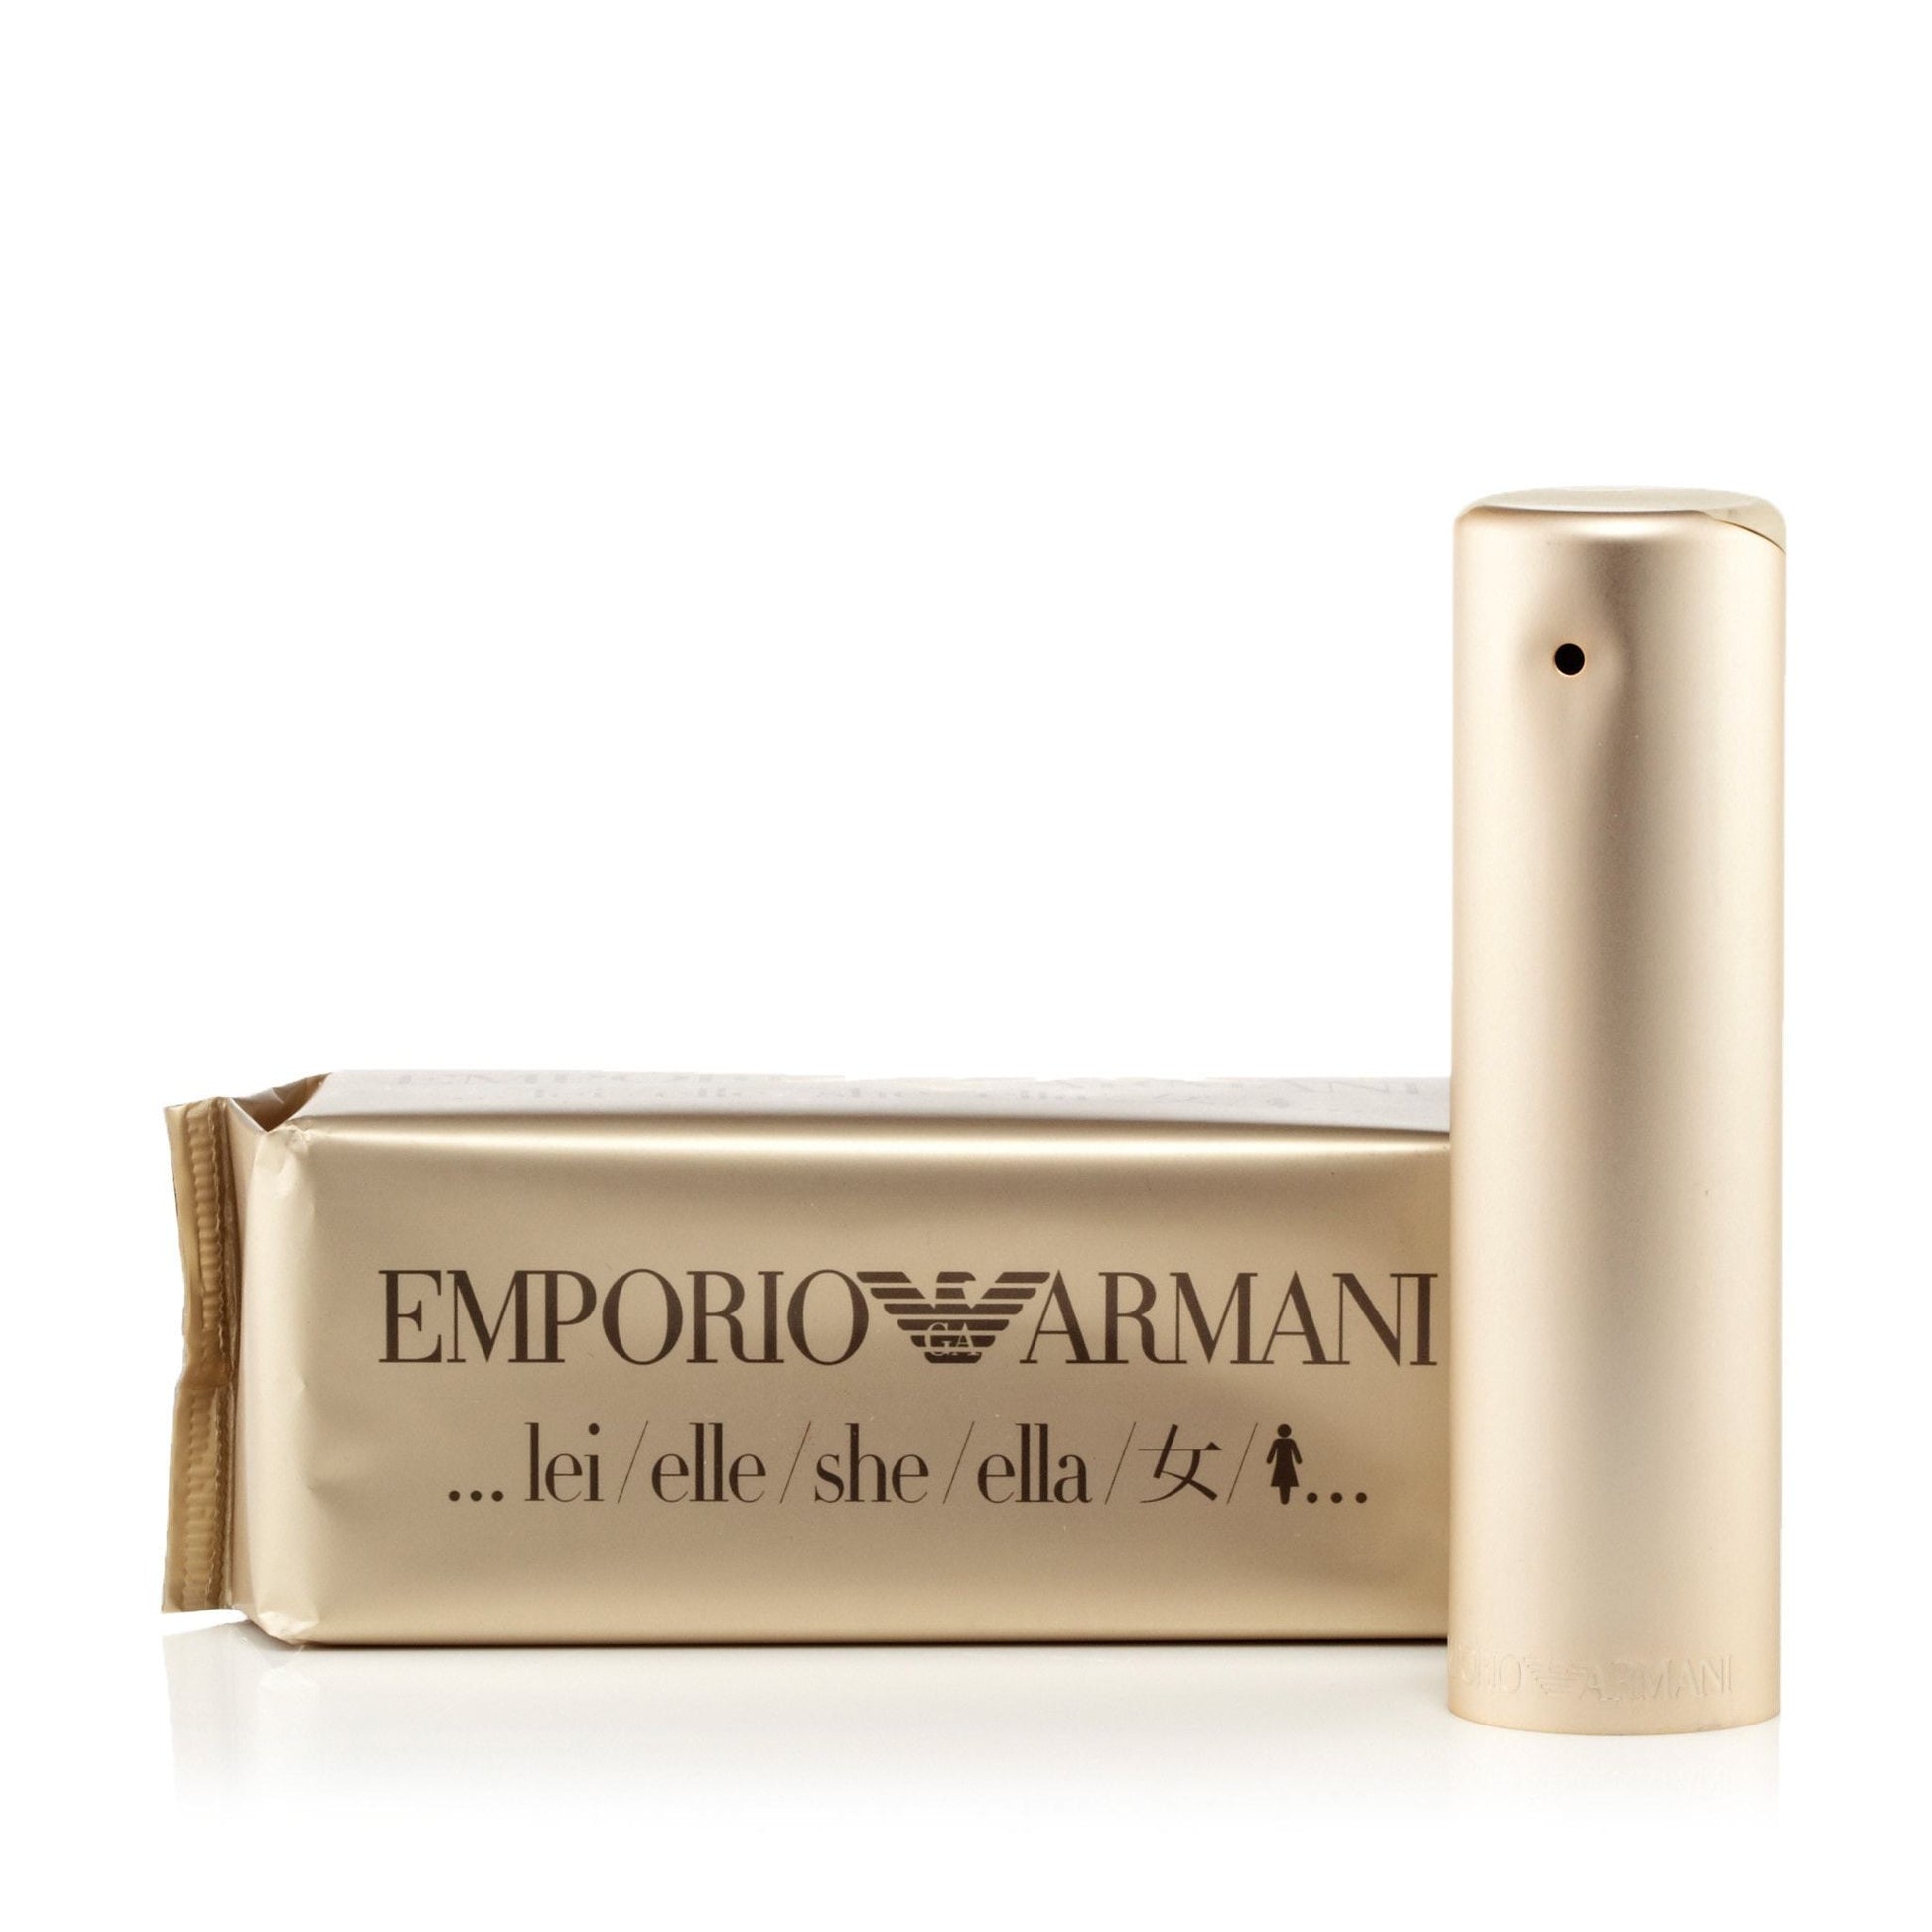 Emporio Armani by Giorgio Armani Eau de Parfum Spray 1.7 oz